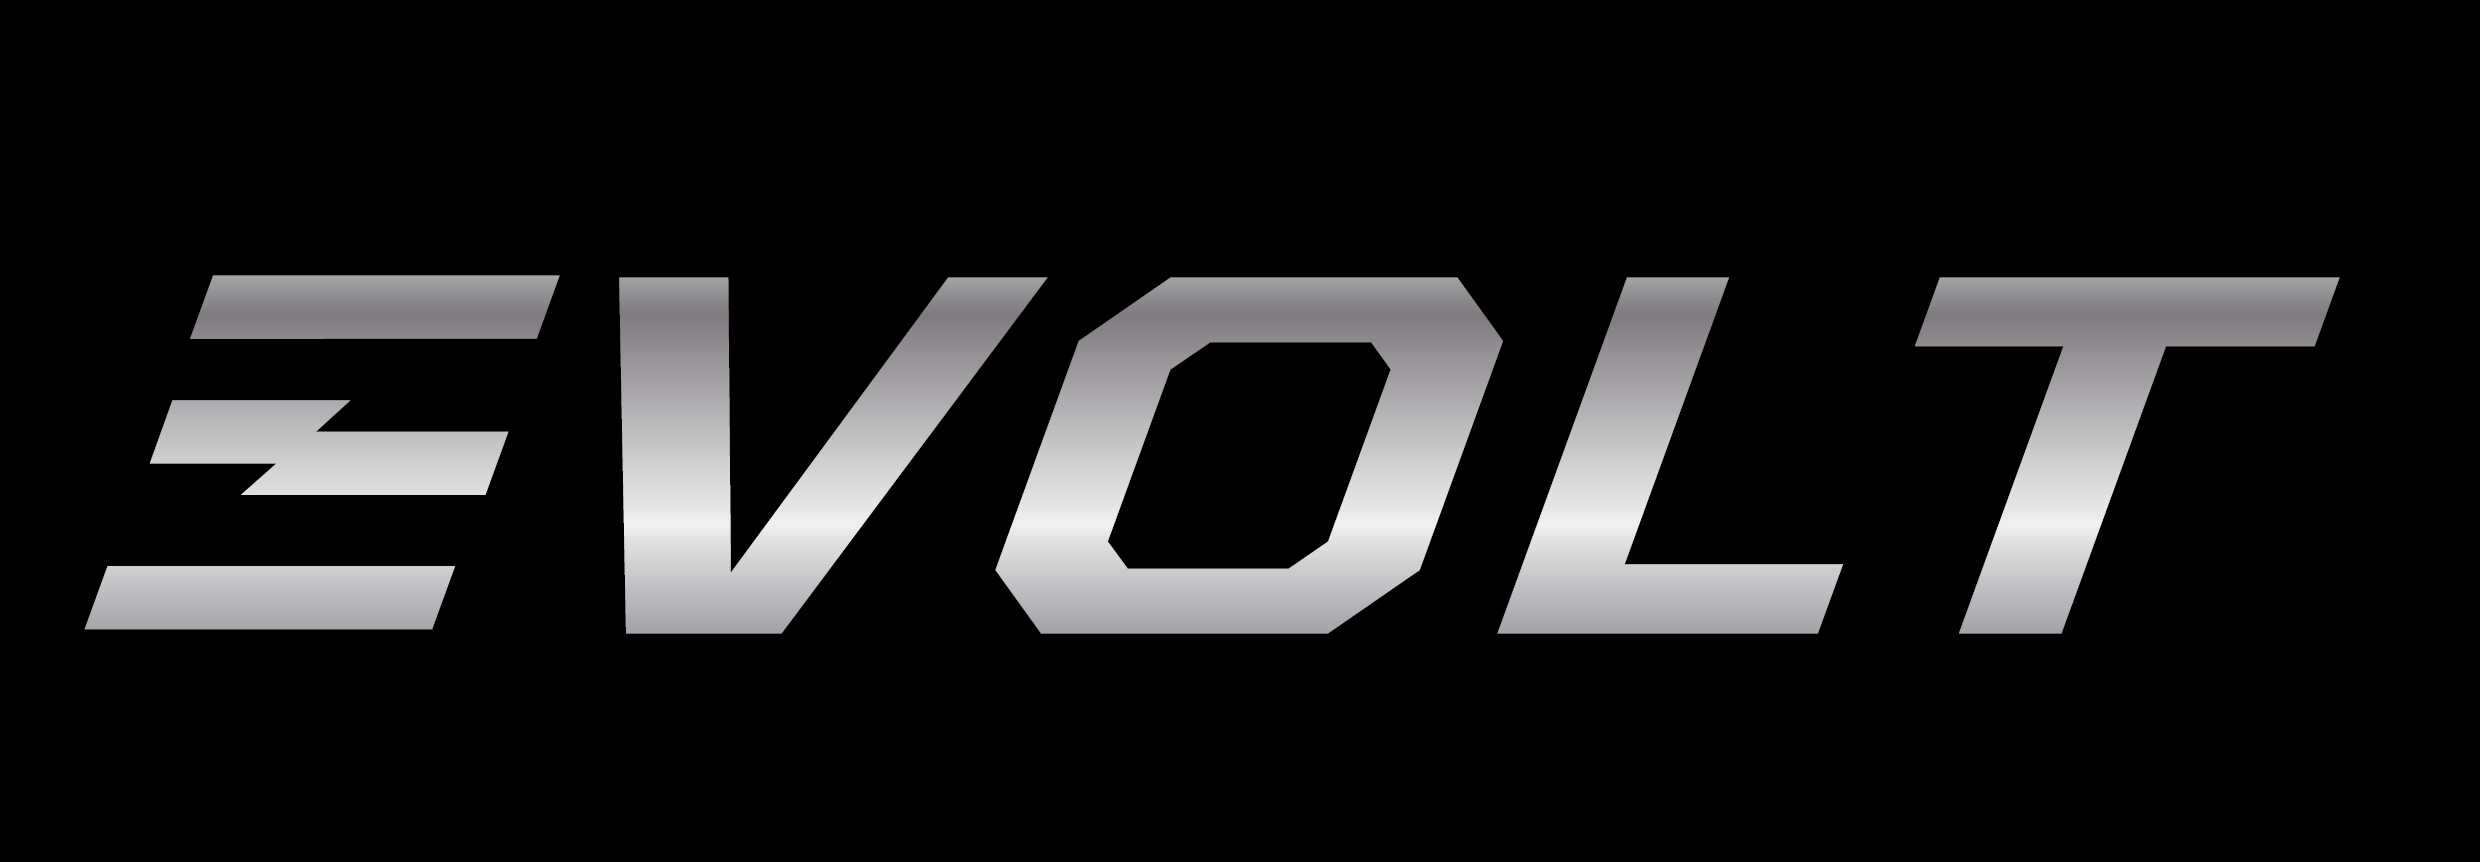 EVOLT LOGO_Logo-Word - Online-5